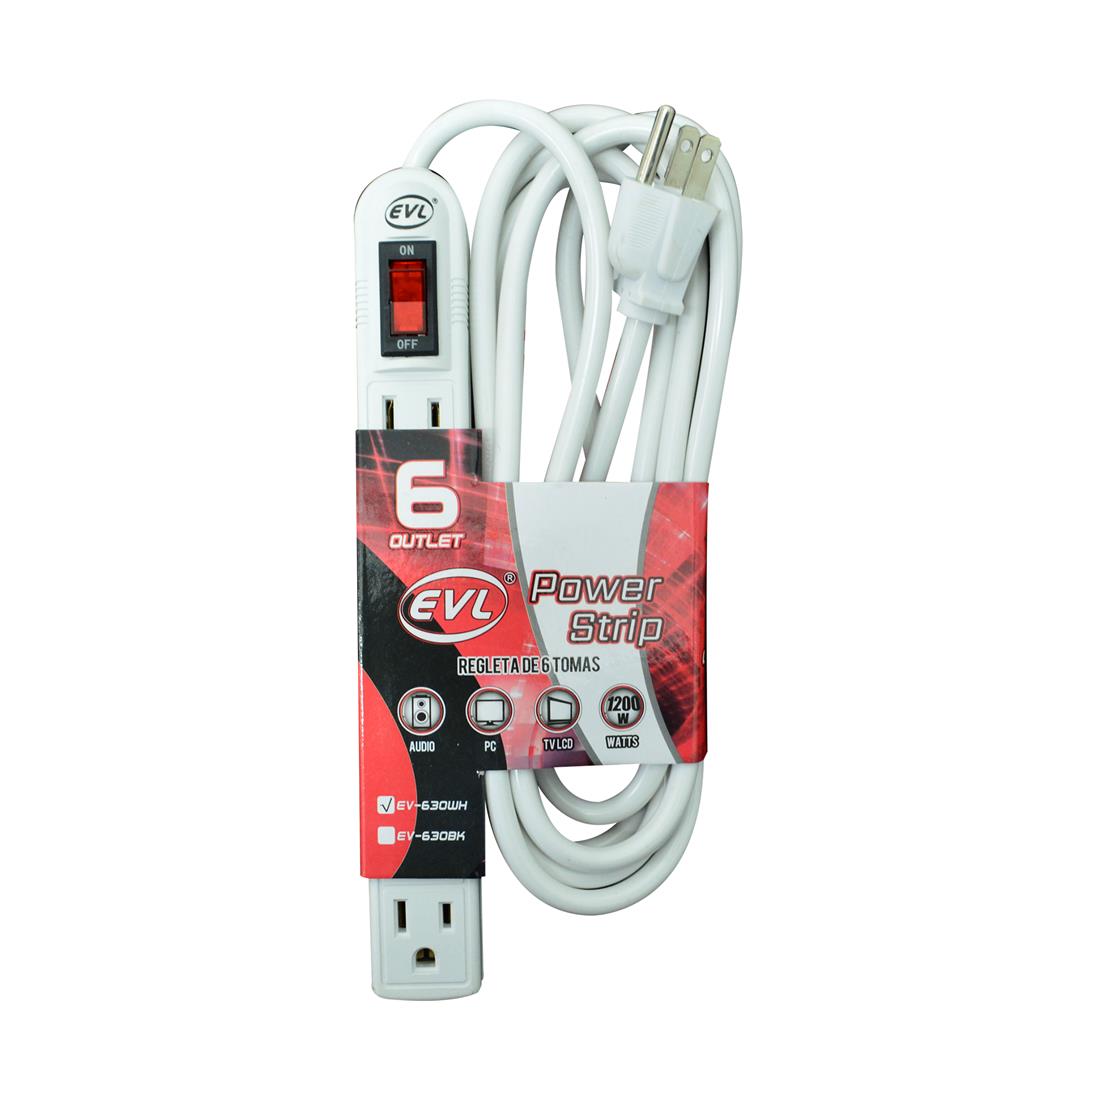 Regleta Enchufes 6 Tomas con Interruptor Silver Electronics Blanco - Medida  3 m